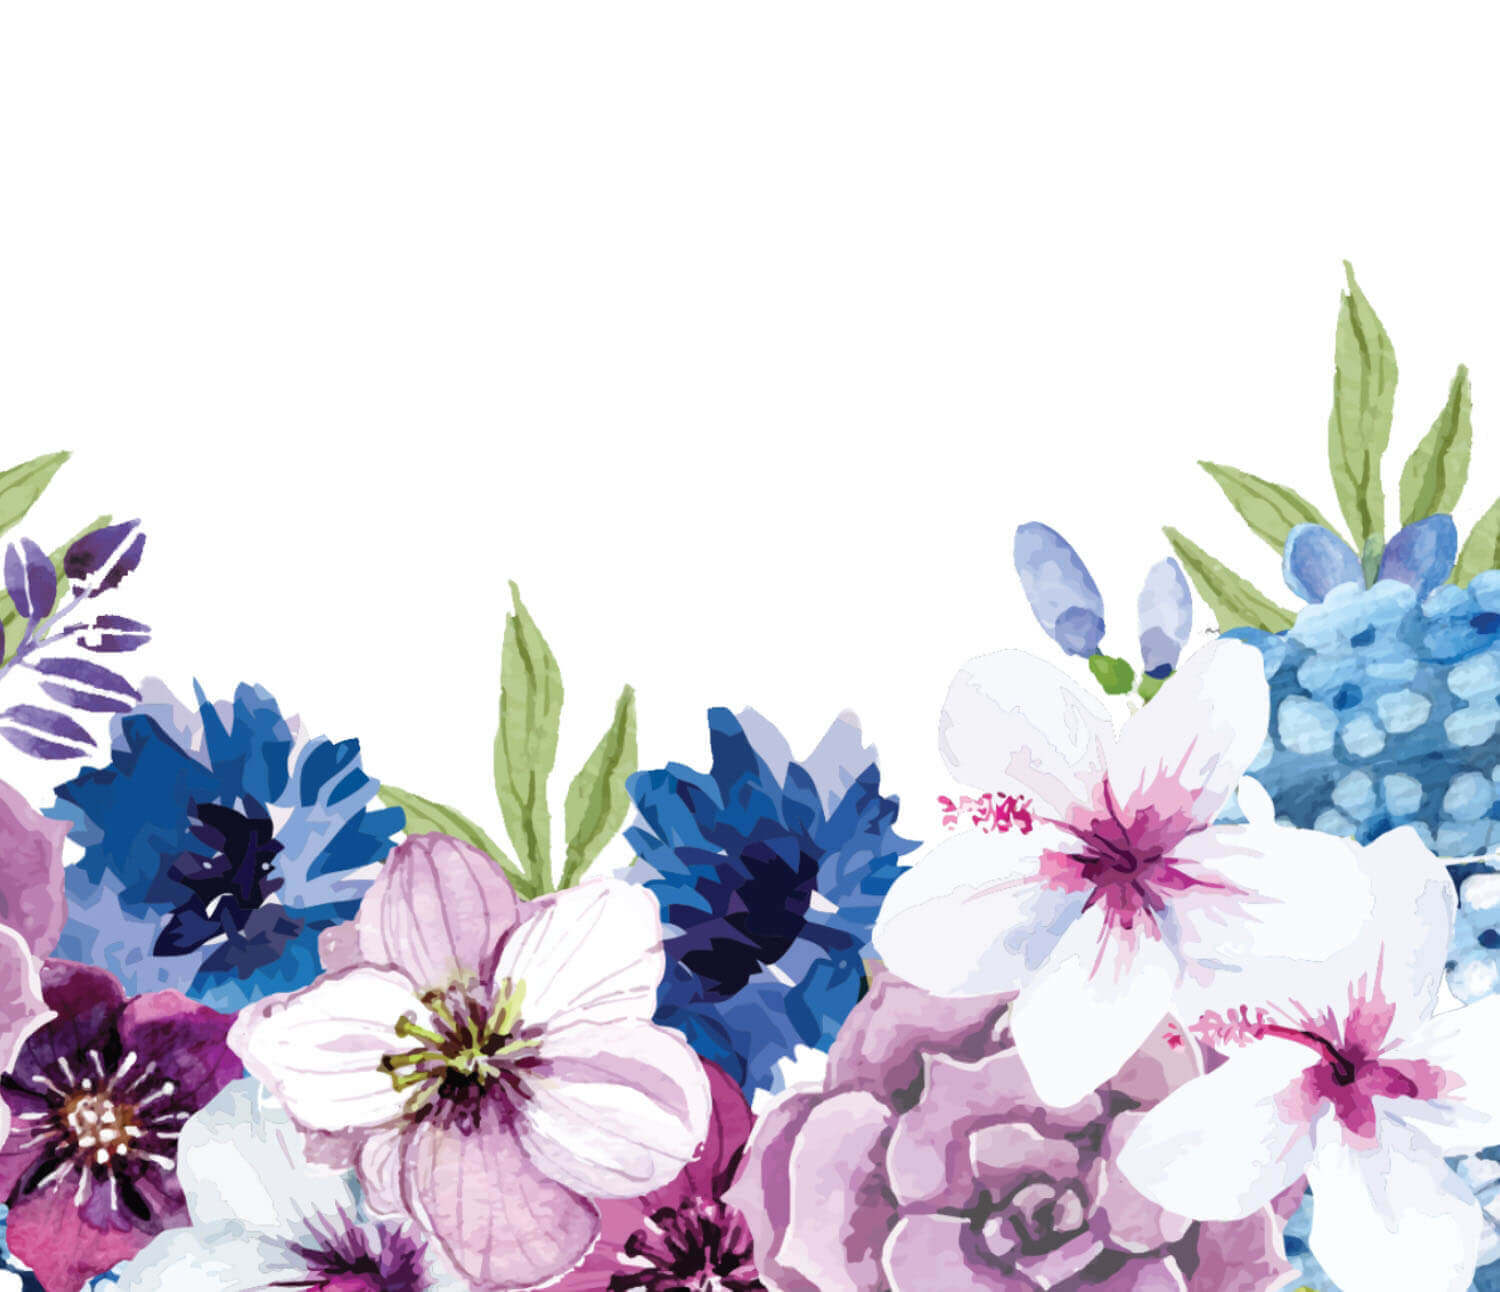 Colorful flowers illustration